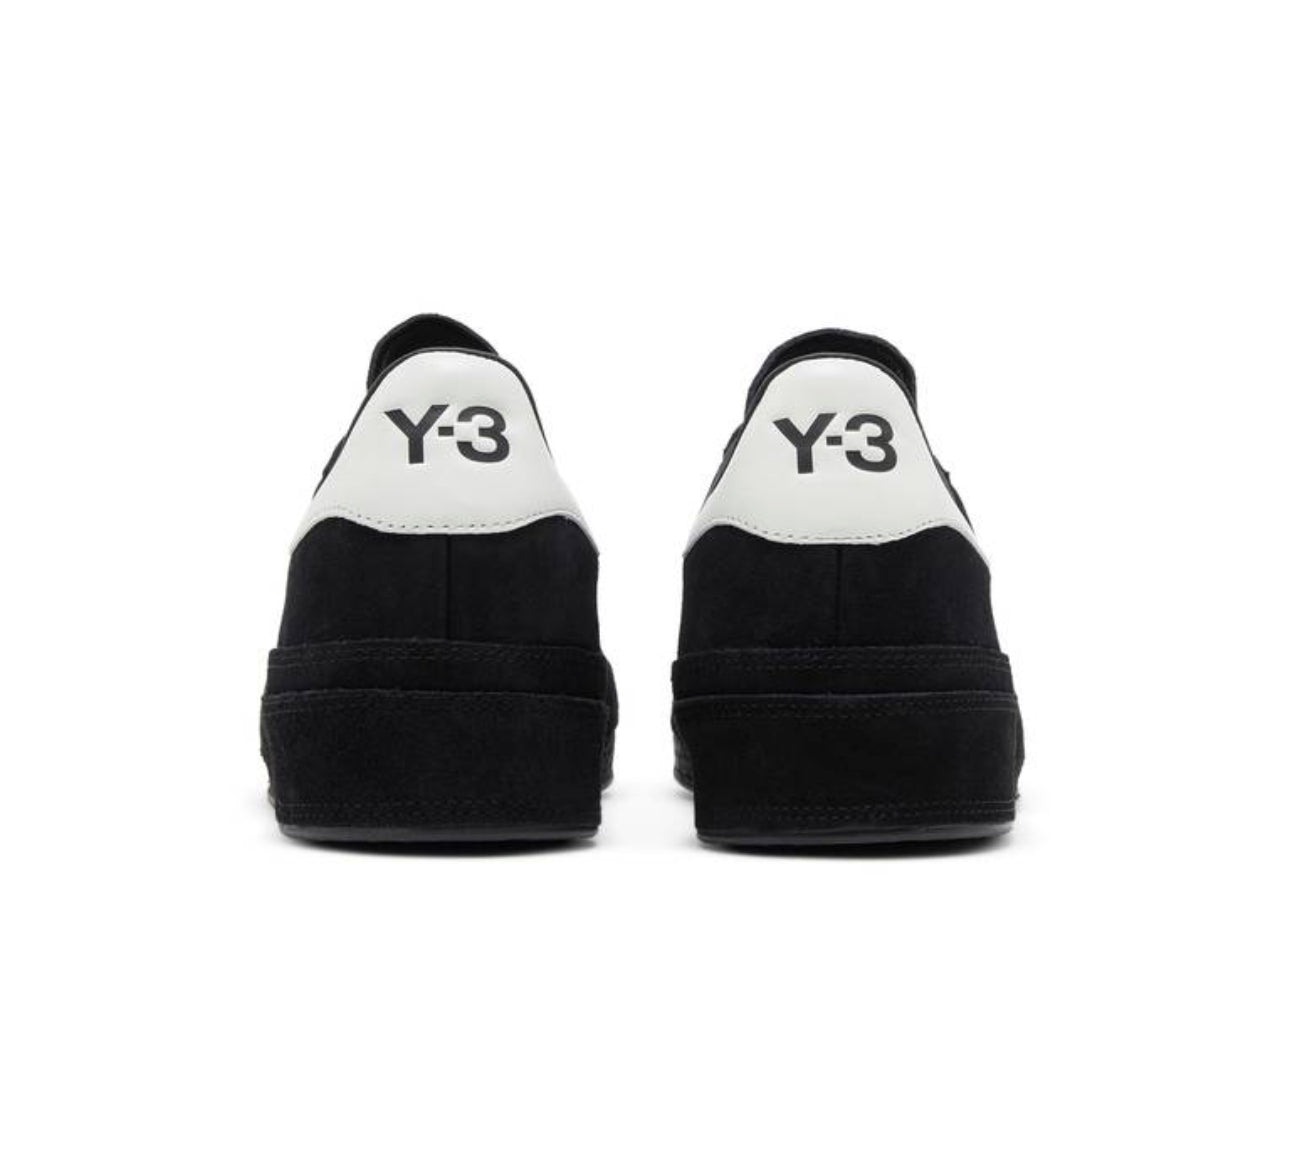 Adidas Y-3 Gazelle Black/White